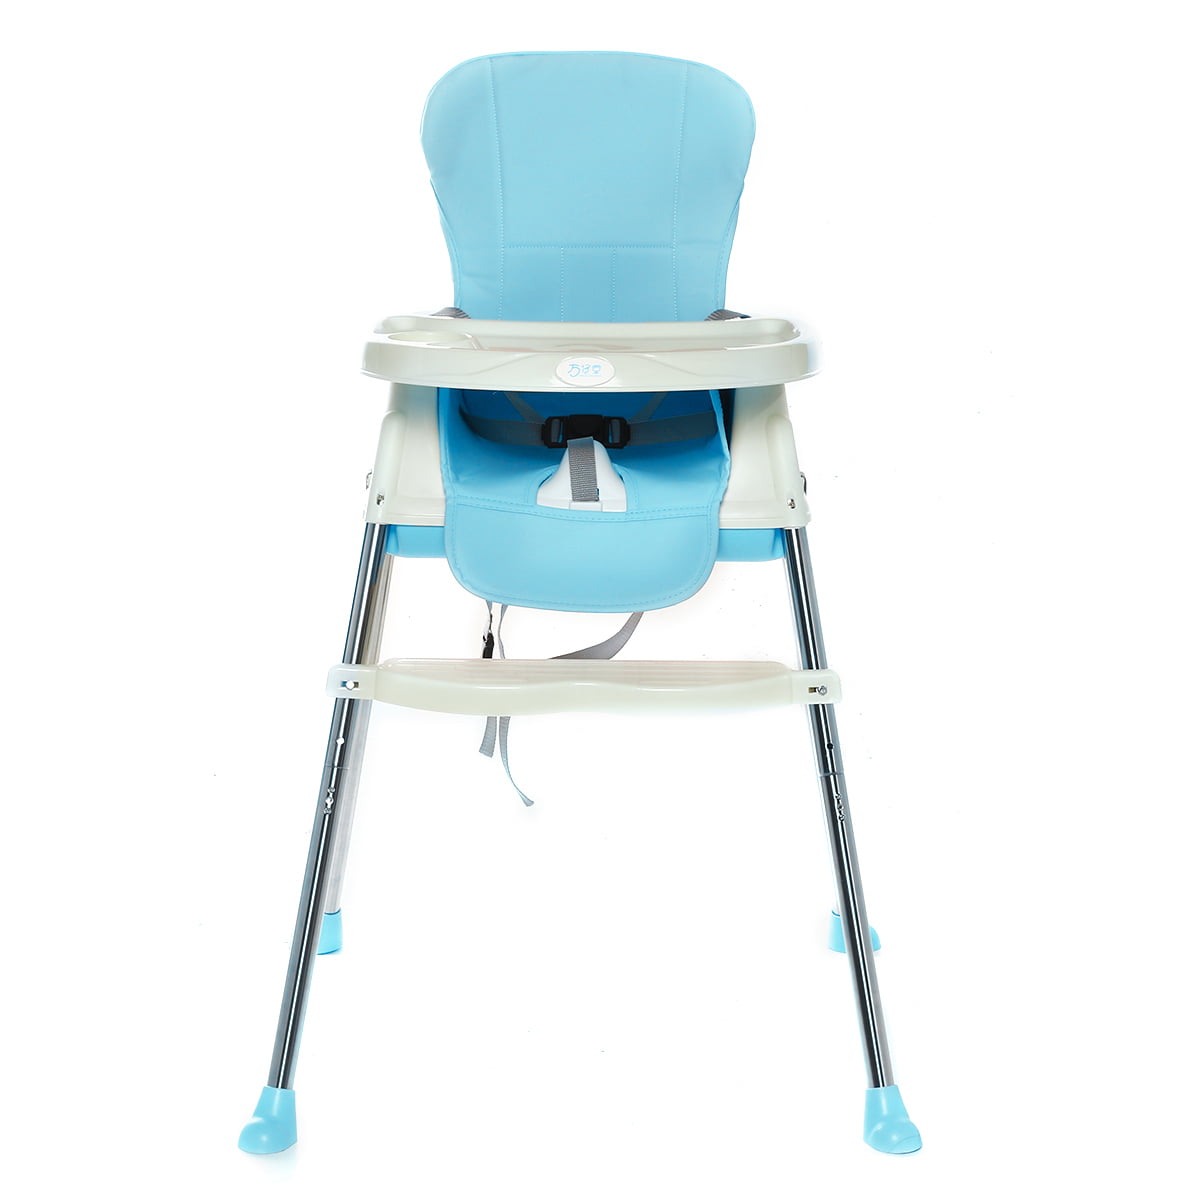 Novashion Baby Toddler Eat &amp; Grow Convertible High Chair, 3-in-1 Convertible High Chair, Adjustable High Chair with Adjustable Tray &amp; Leg